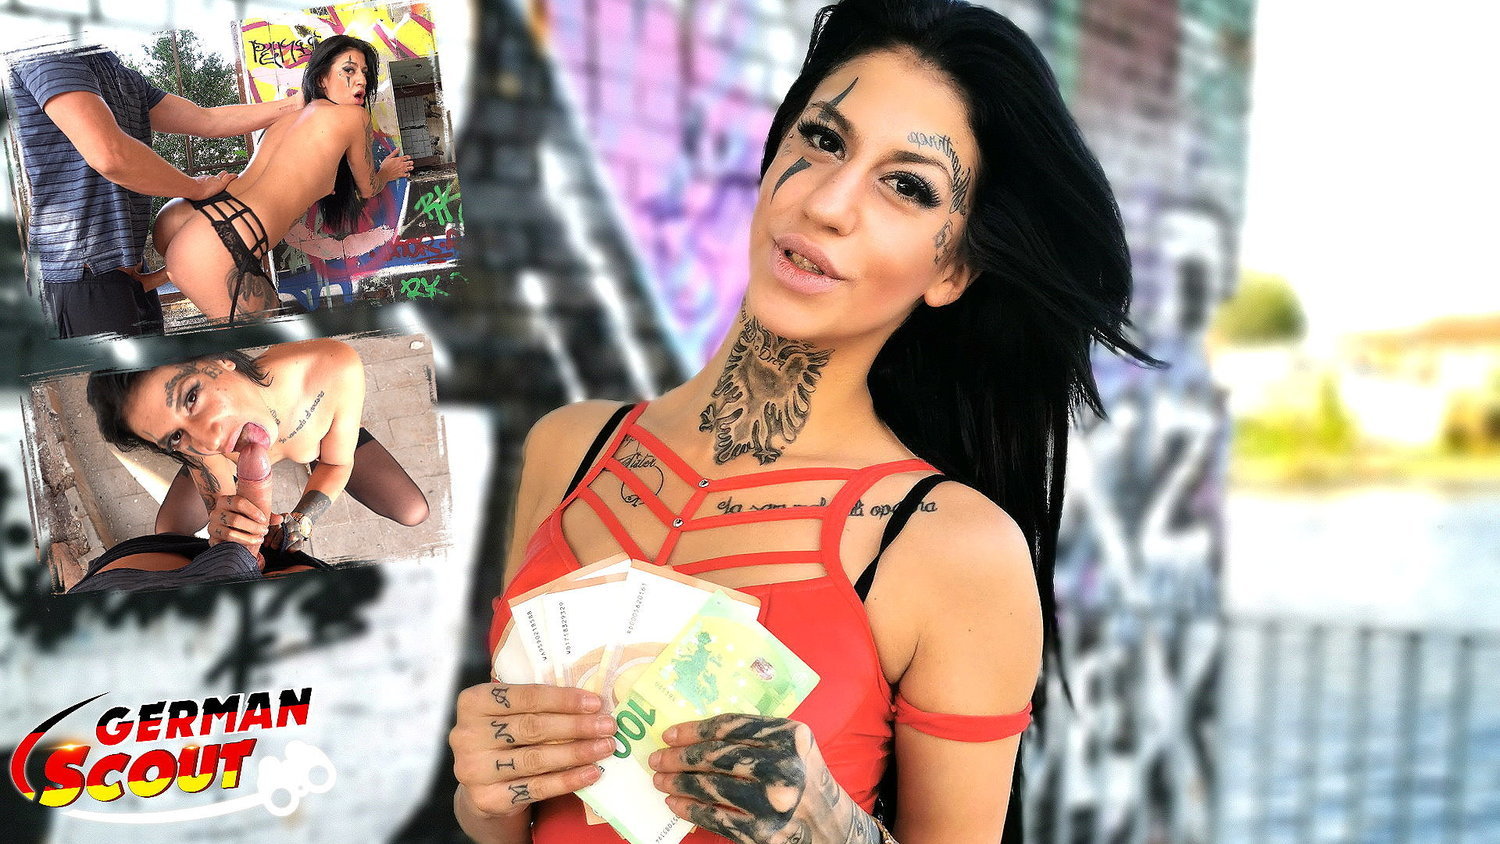 Tattoed inked transgender prostitute